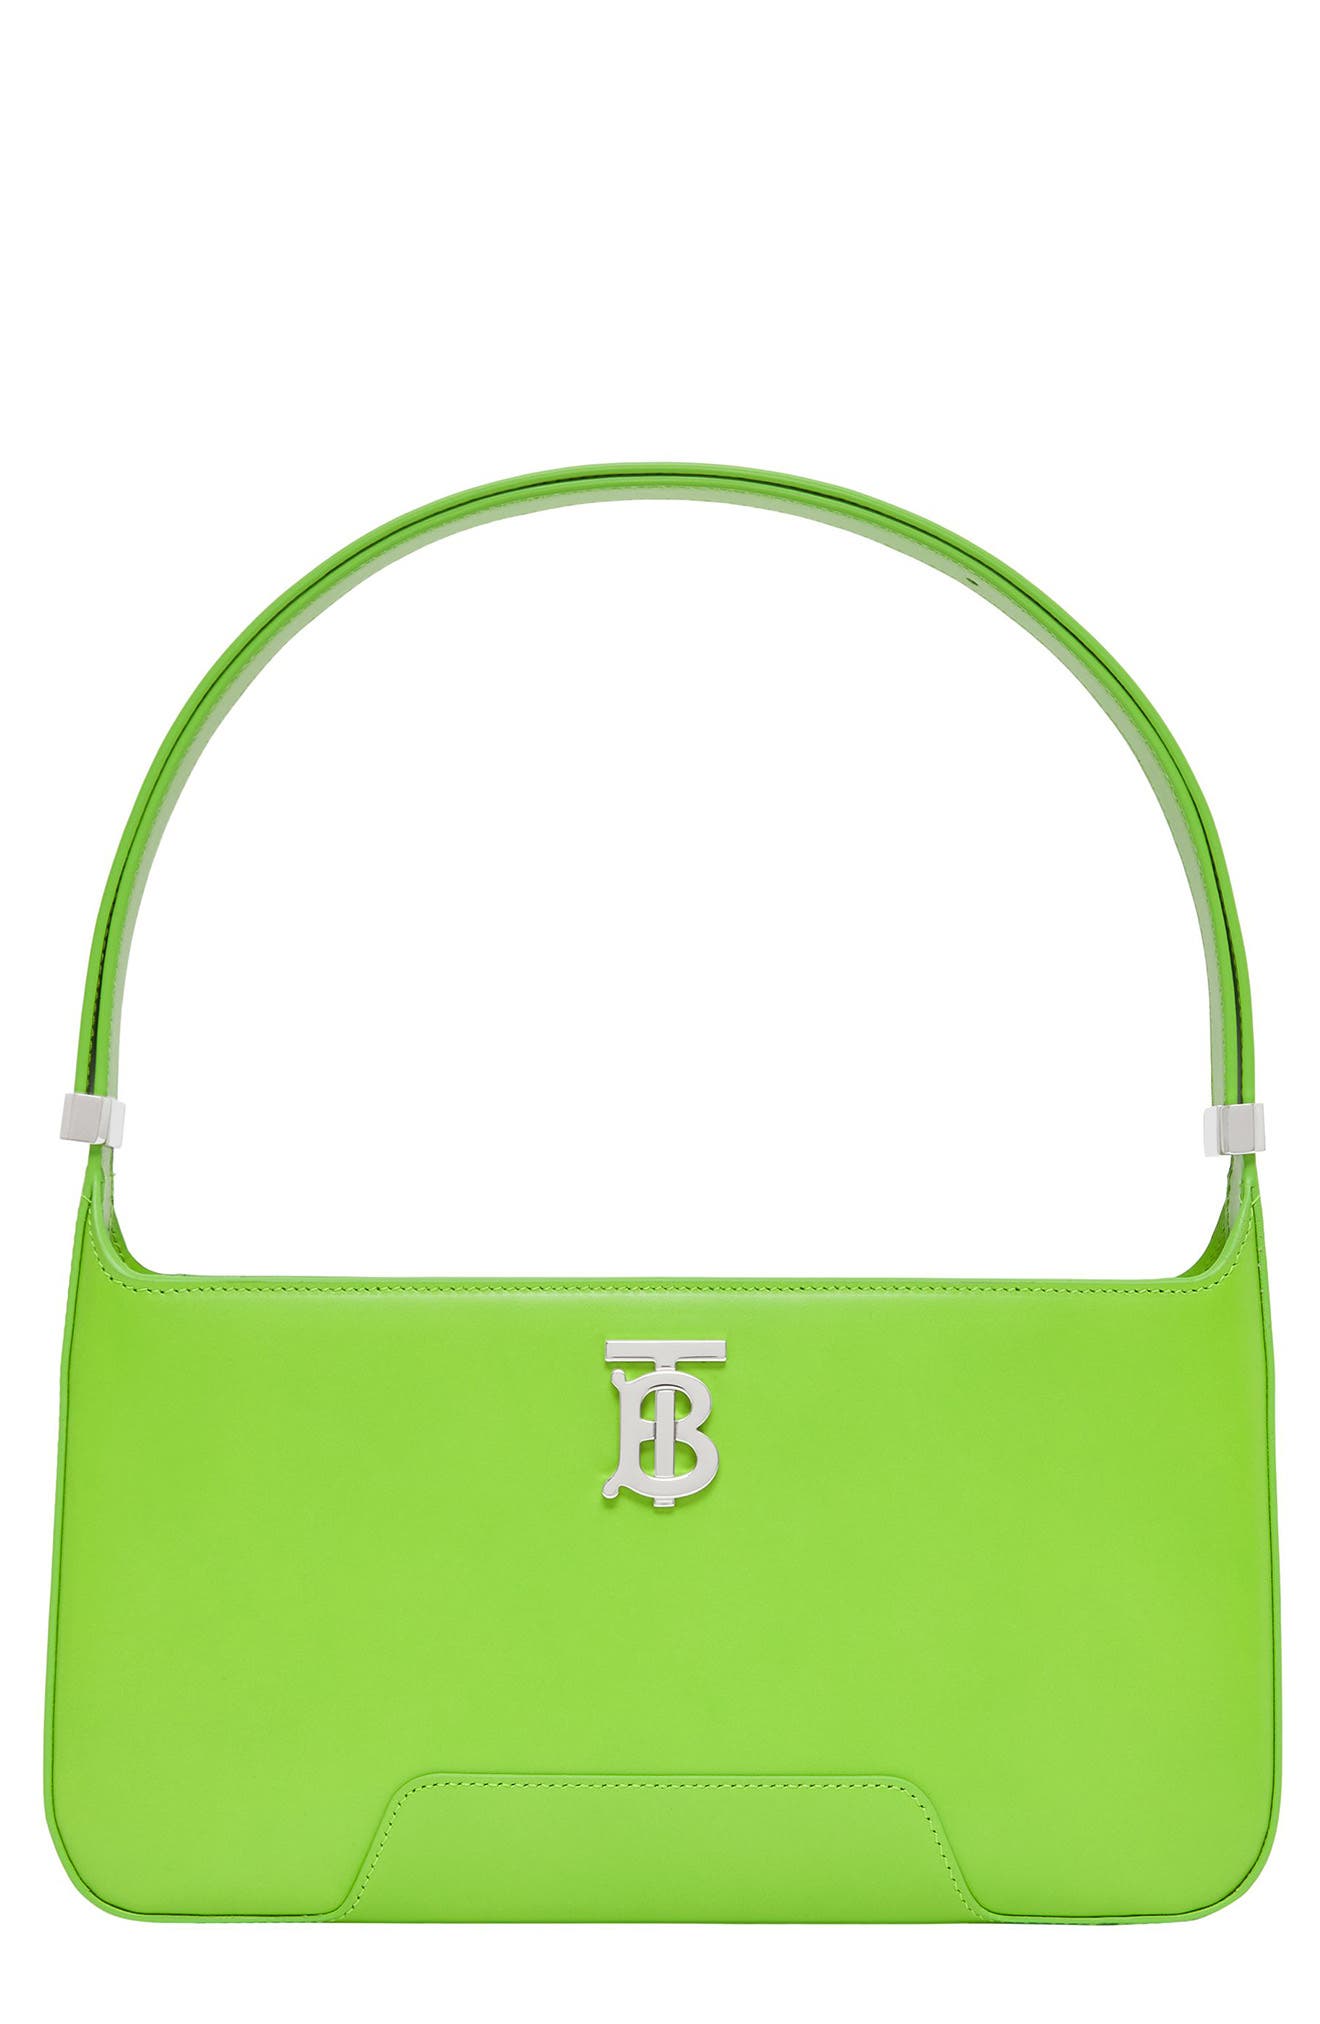 Burberry Medium TB Monogram Leather Shoulder Bag in Brilliant Green at Nordstrom